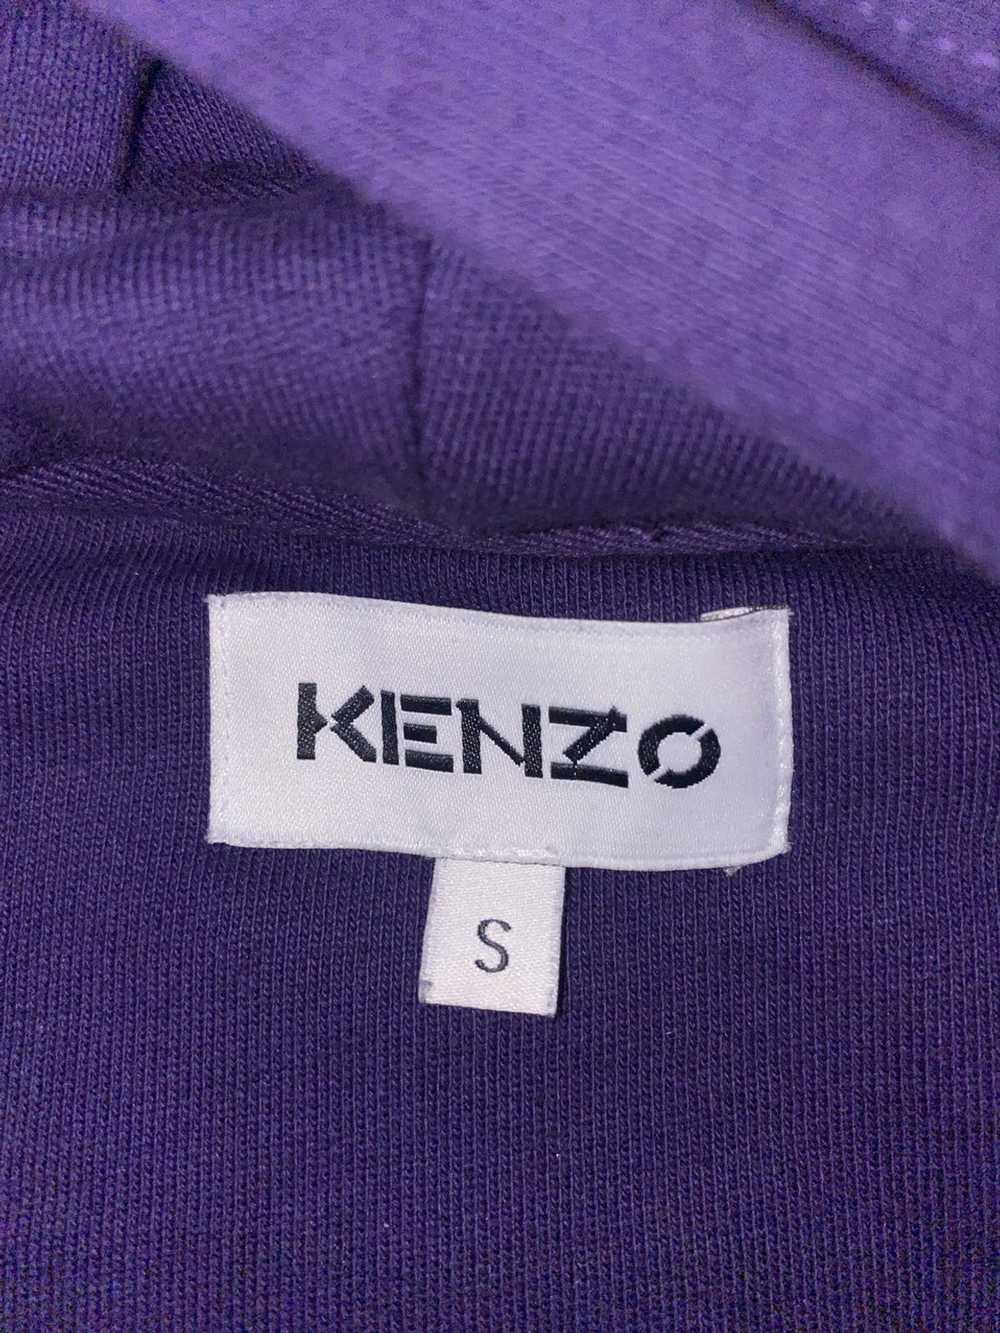 Kenzo KENZO Tiger Original Hoodie Sweatshirt - image 3